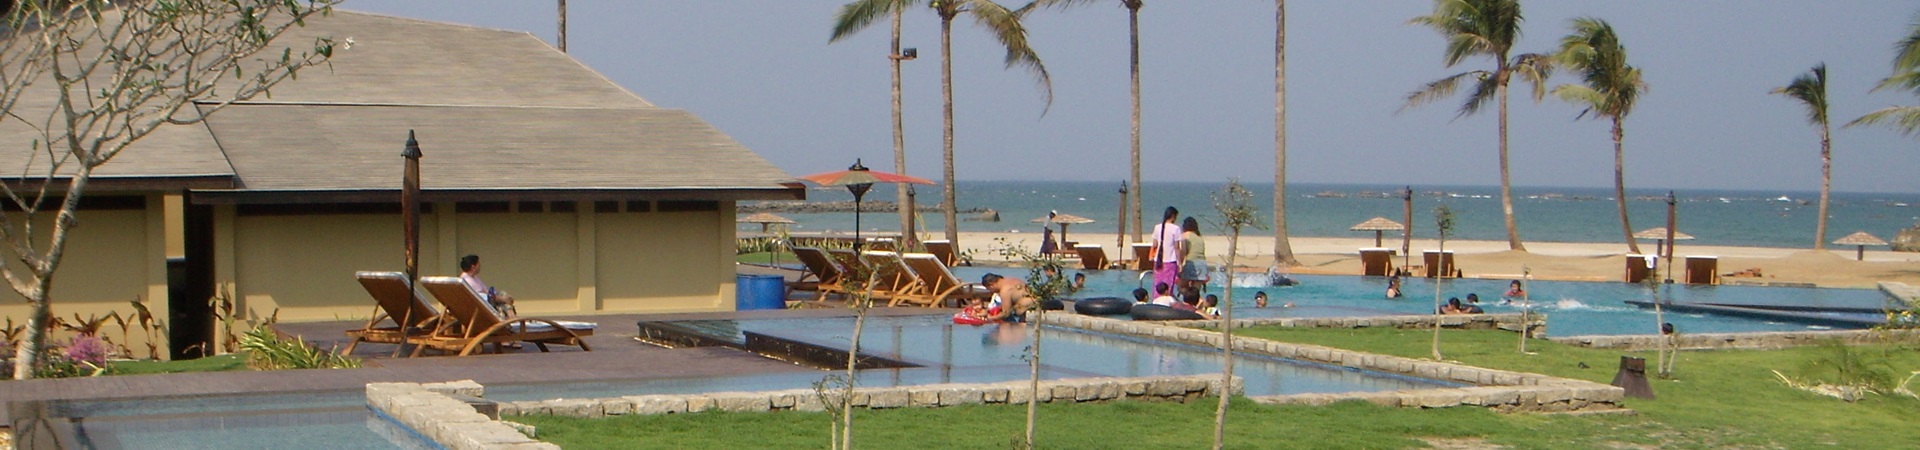 Image of Bay of Bengal Resort